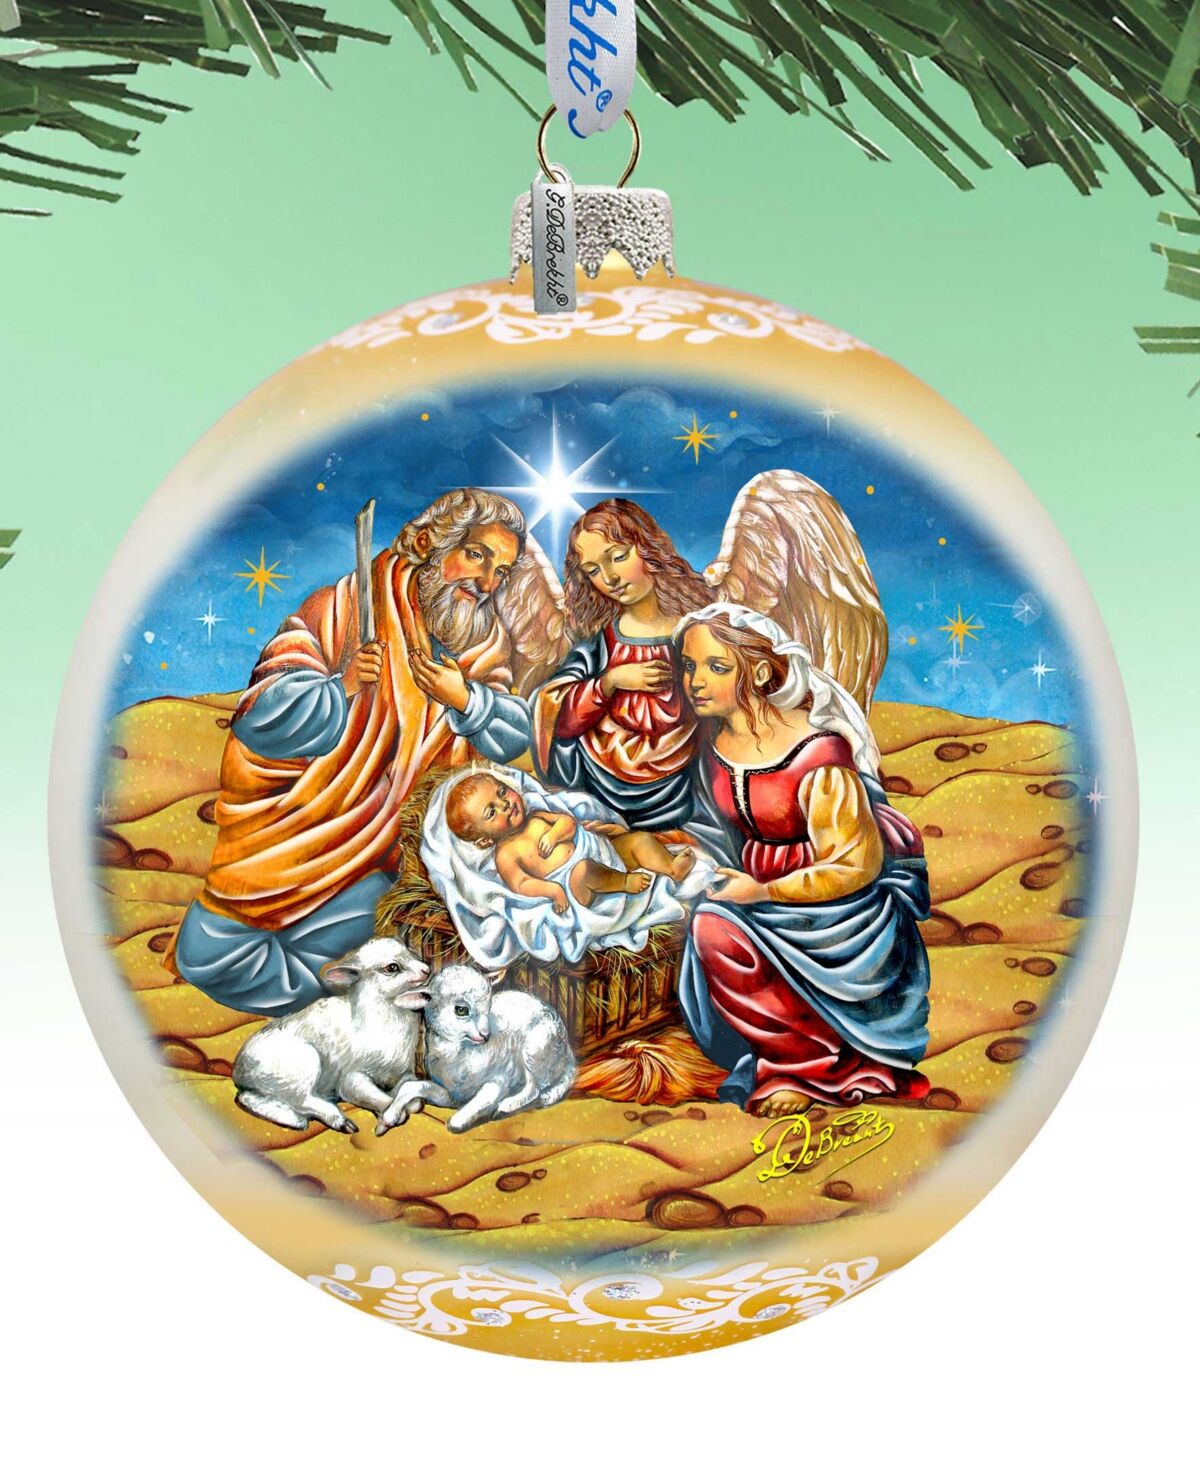 Designocracy Regal Nativity Lg Holiday Mercury Glass Collectible Ornaments G. DeBrekht - Multi Color